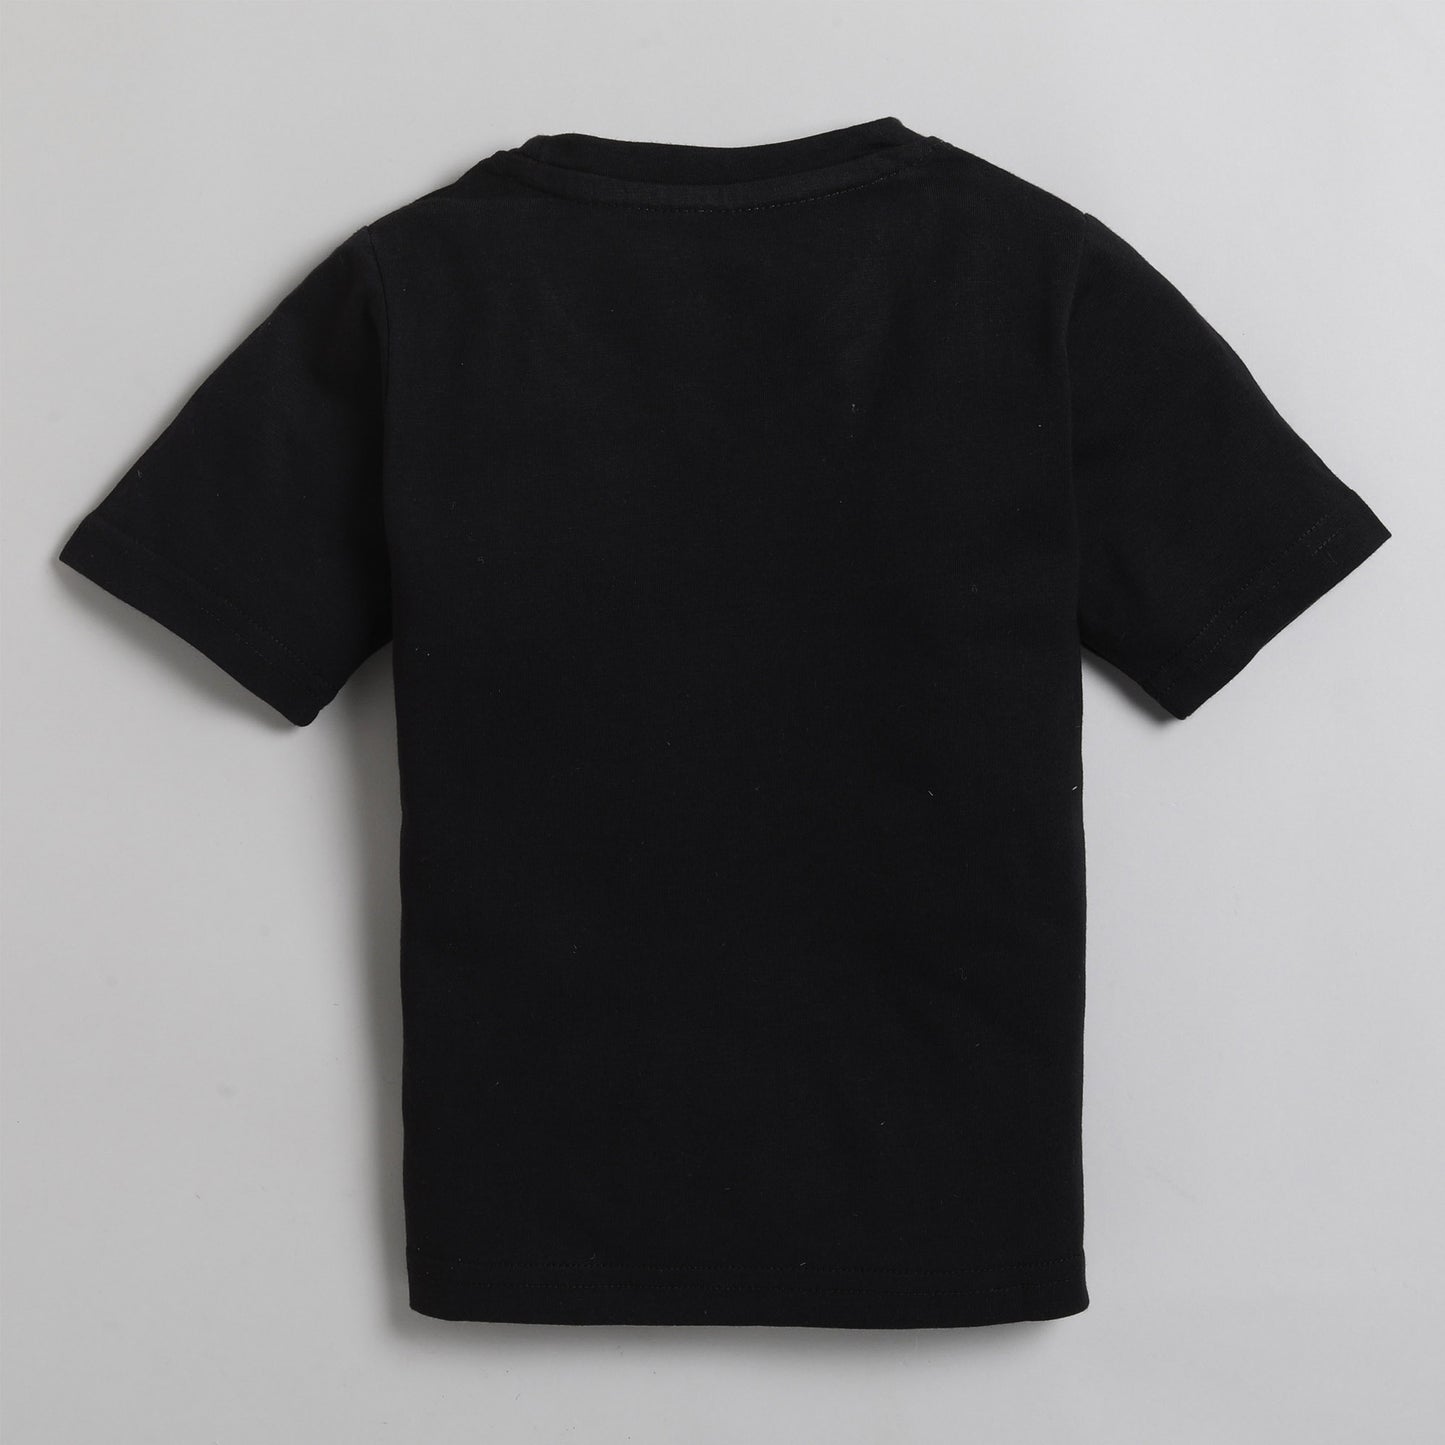 Polka Tots Half Sleeve T-Shirt Don't Tell My MOM Print - Black